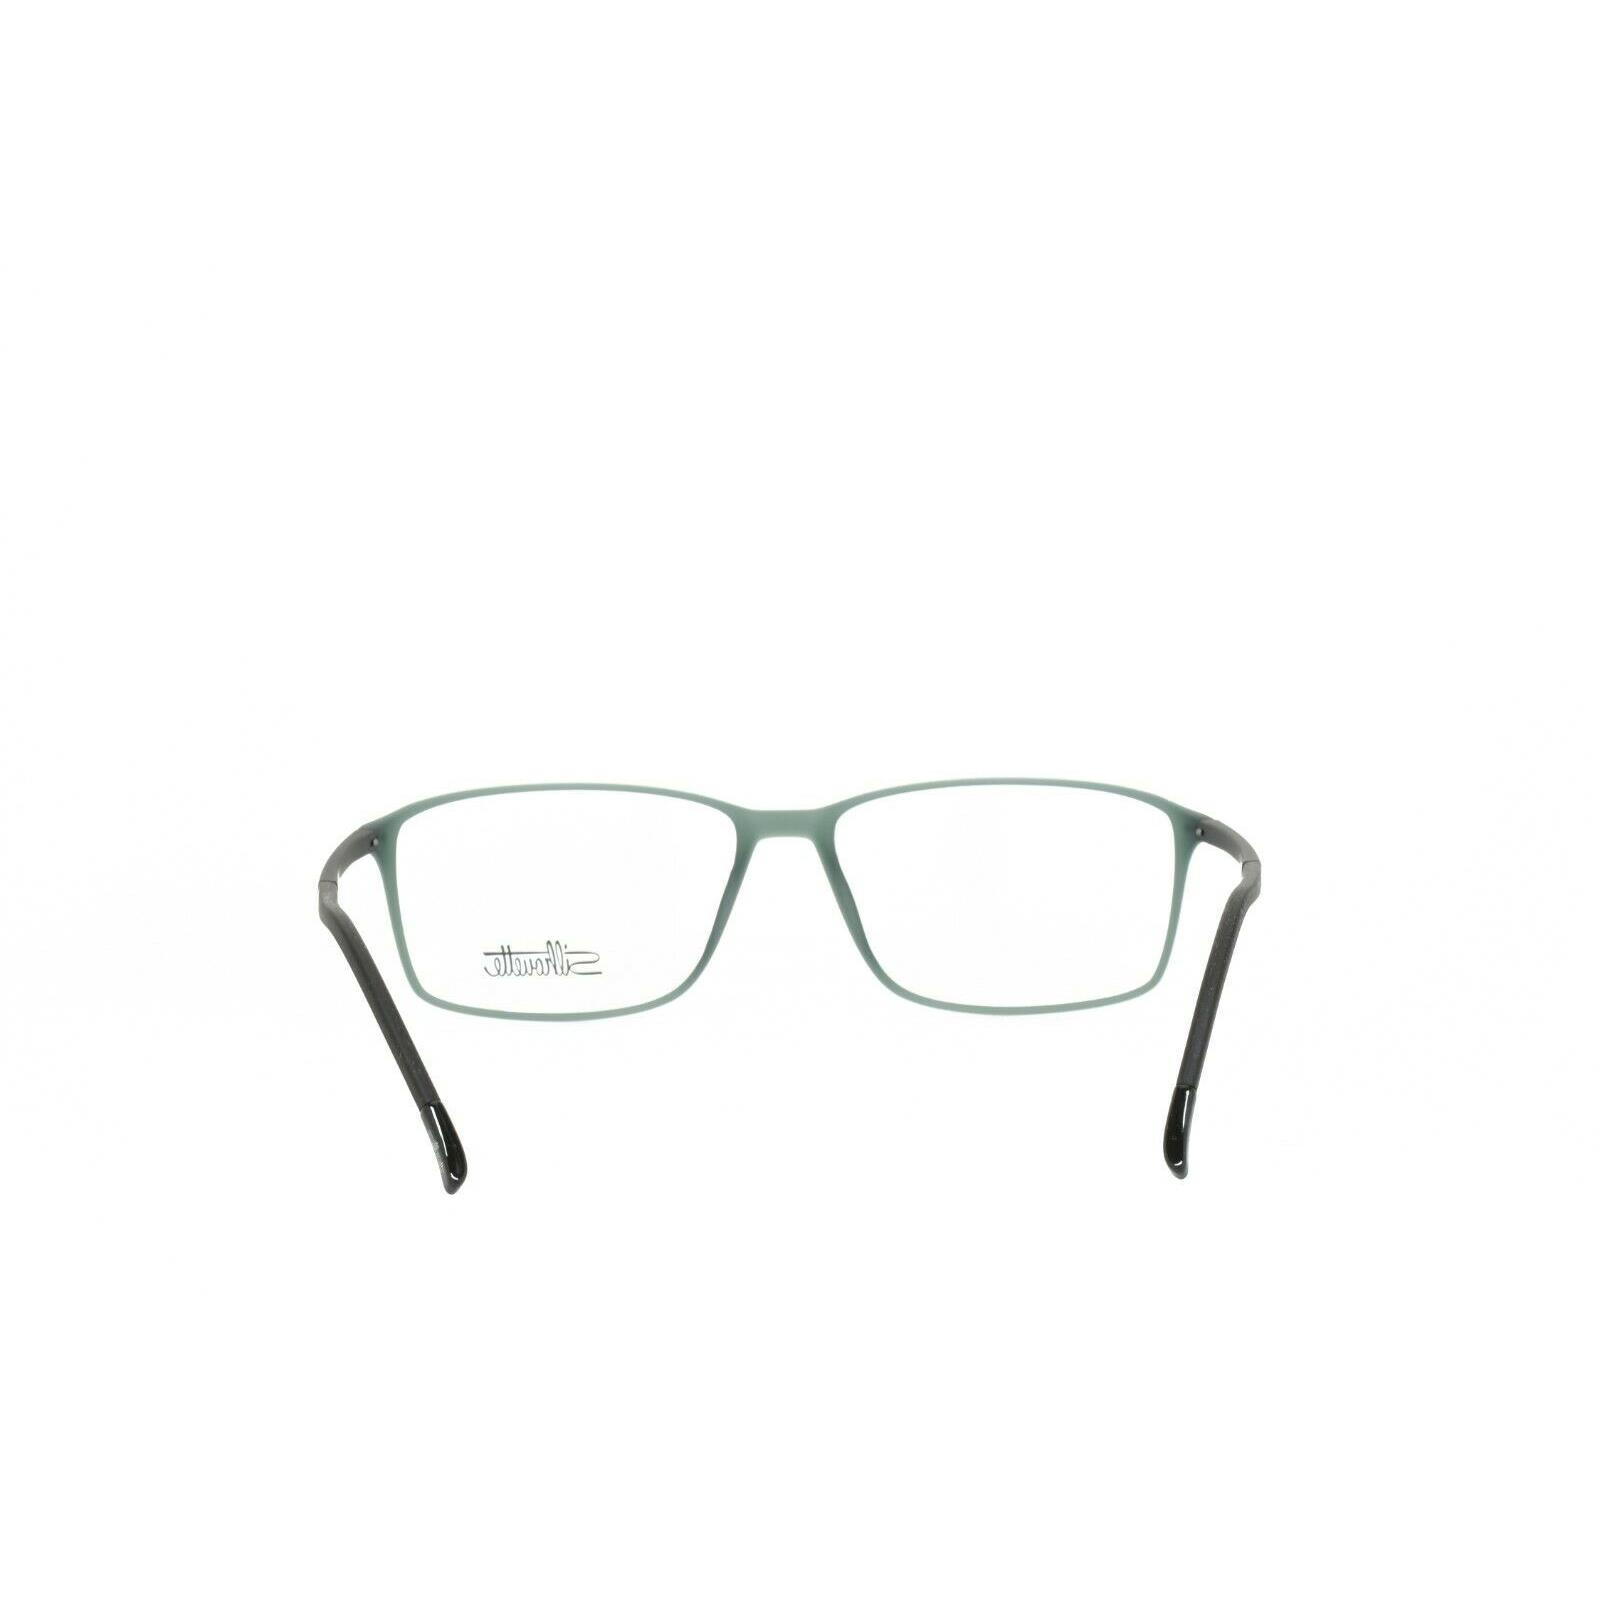 Silhouette eyeglasses SPX ILLUSION - Grey Frame 2